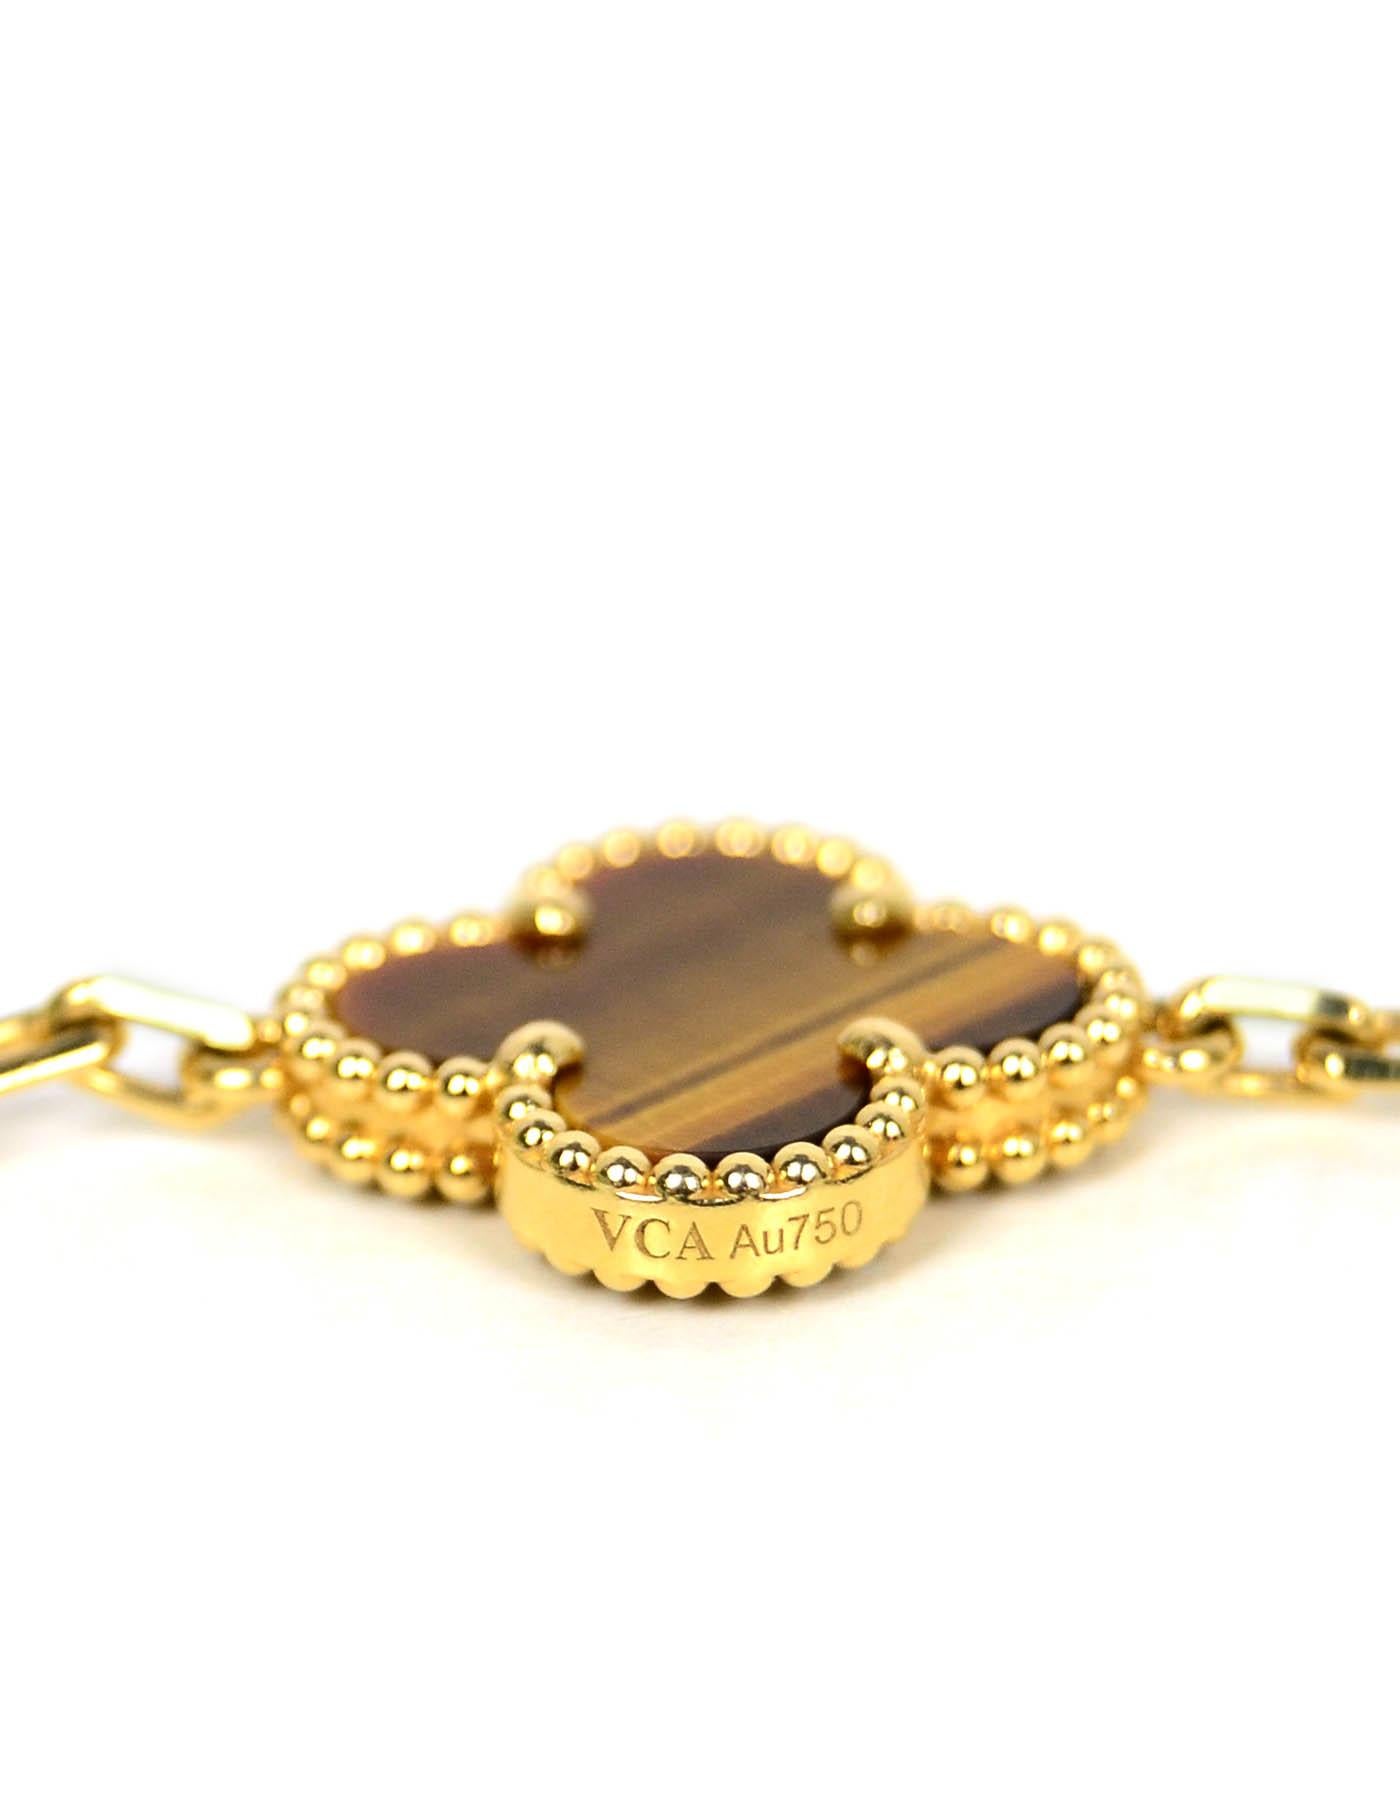 Uncut Van Cleef & Arpels 18K Yellow Gold/Tiger's Eye 5 Motif Vintage Alhambra Bracelet